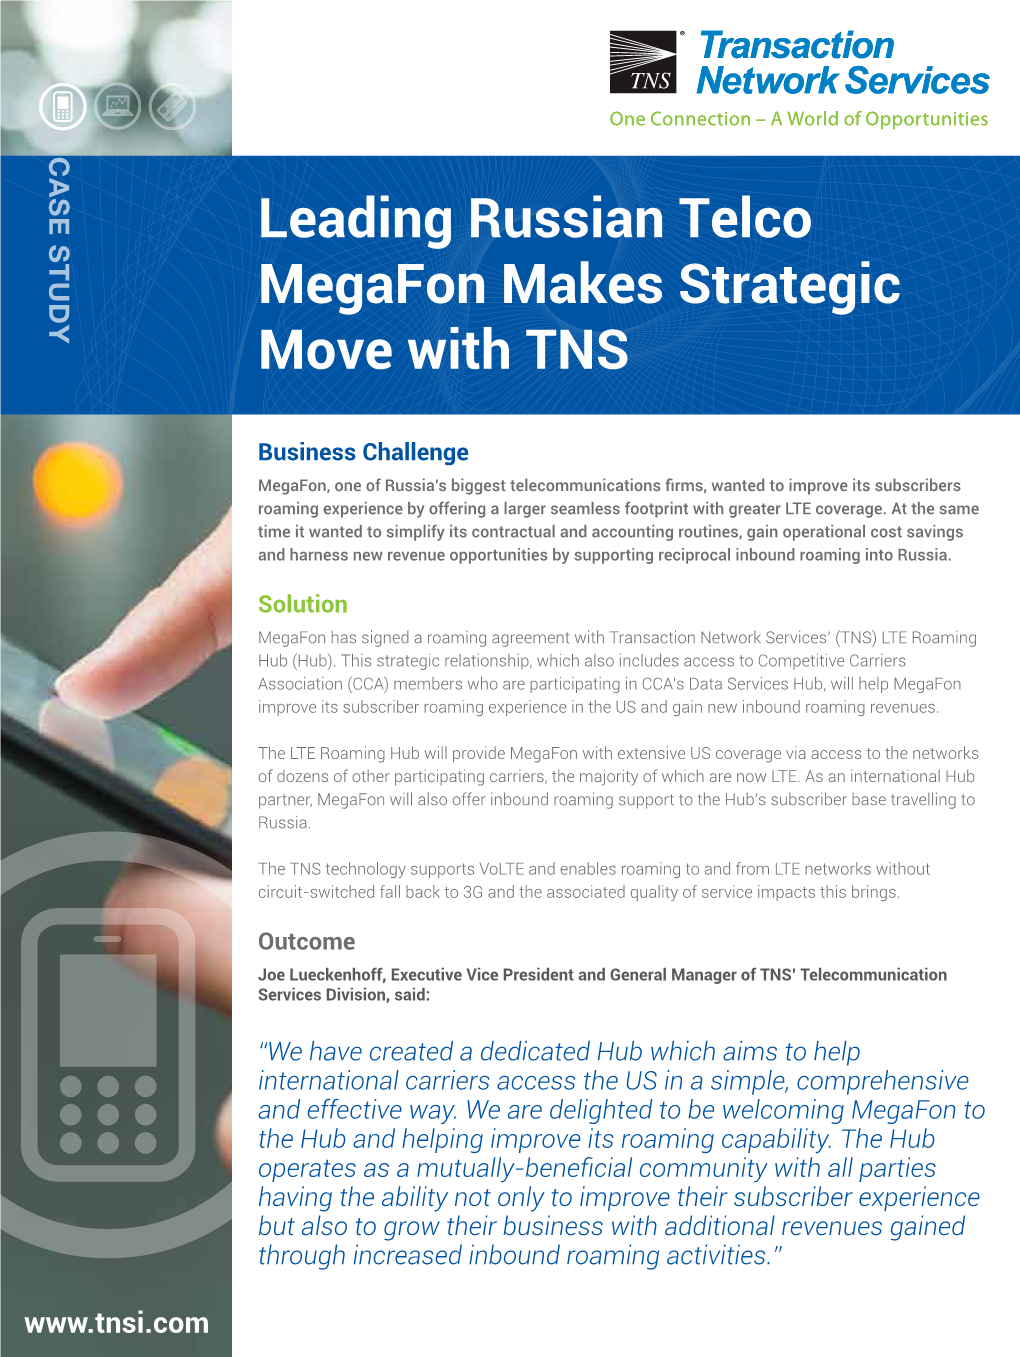 Leading Russian Telco Megafon Makes Strategic Move with TNS